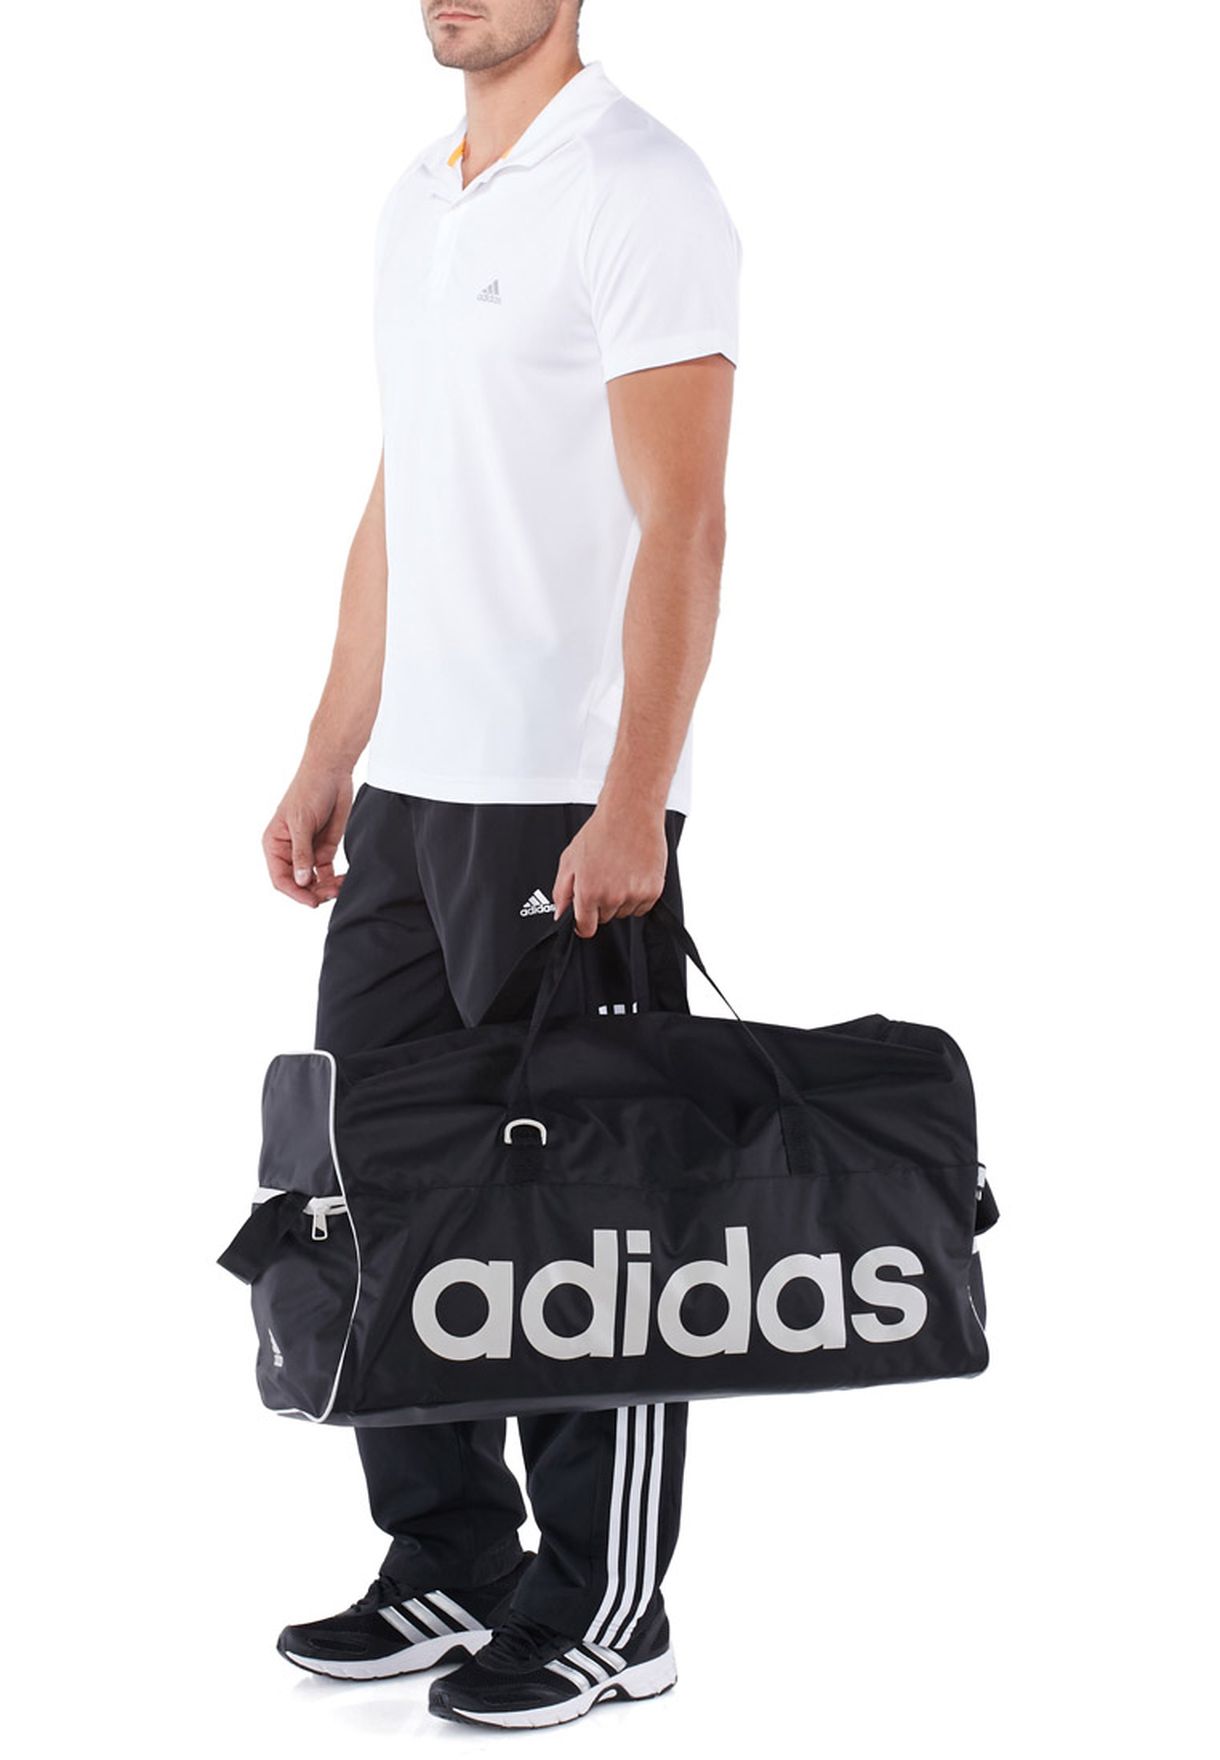 adidas linear performance duffel bag